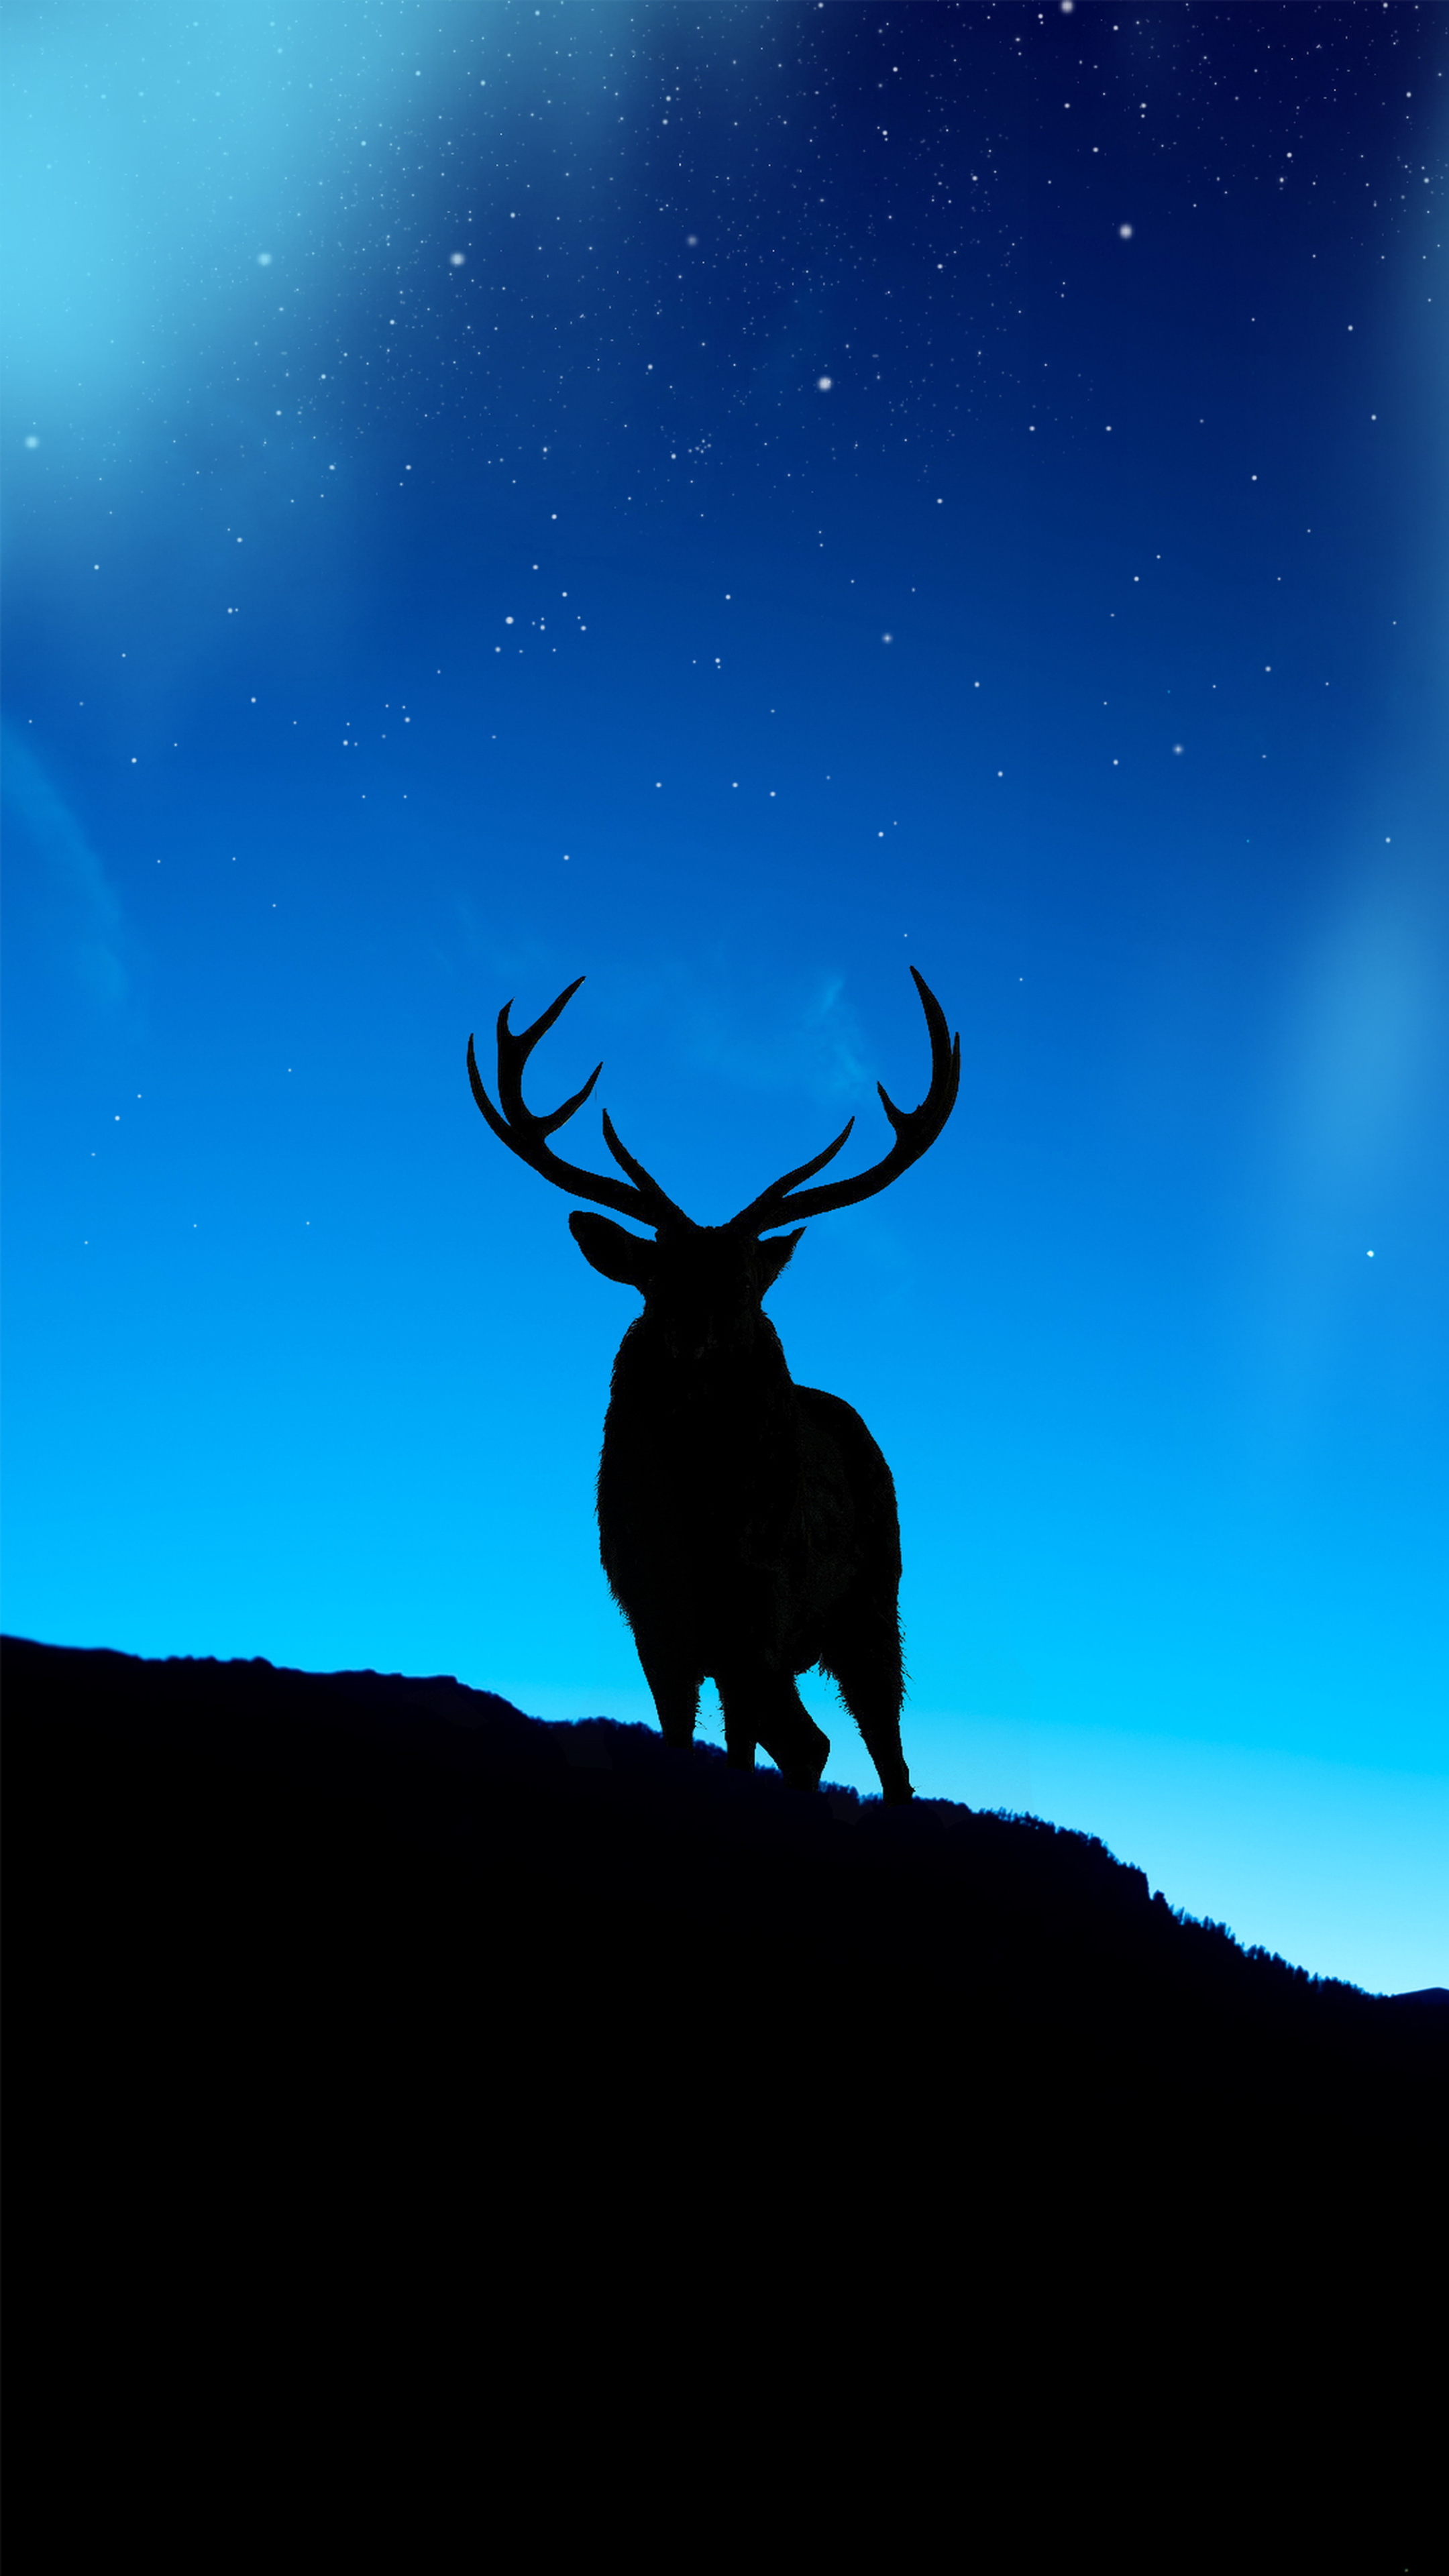 Deer and Northern Lights by Suranga Weeratunga